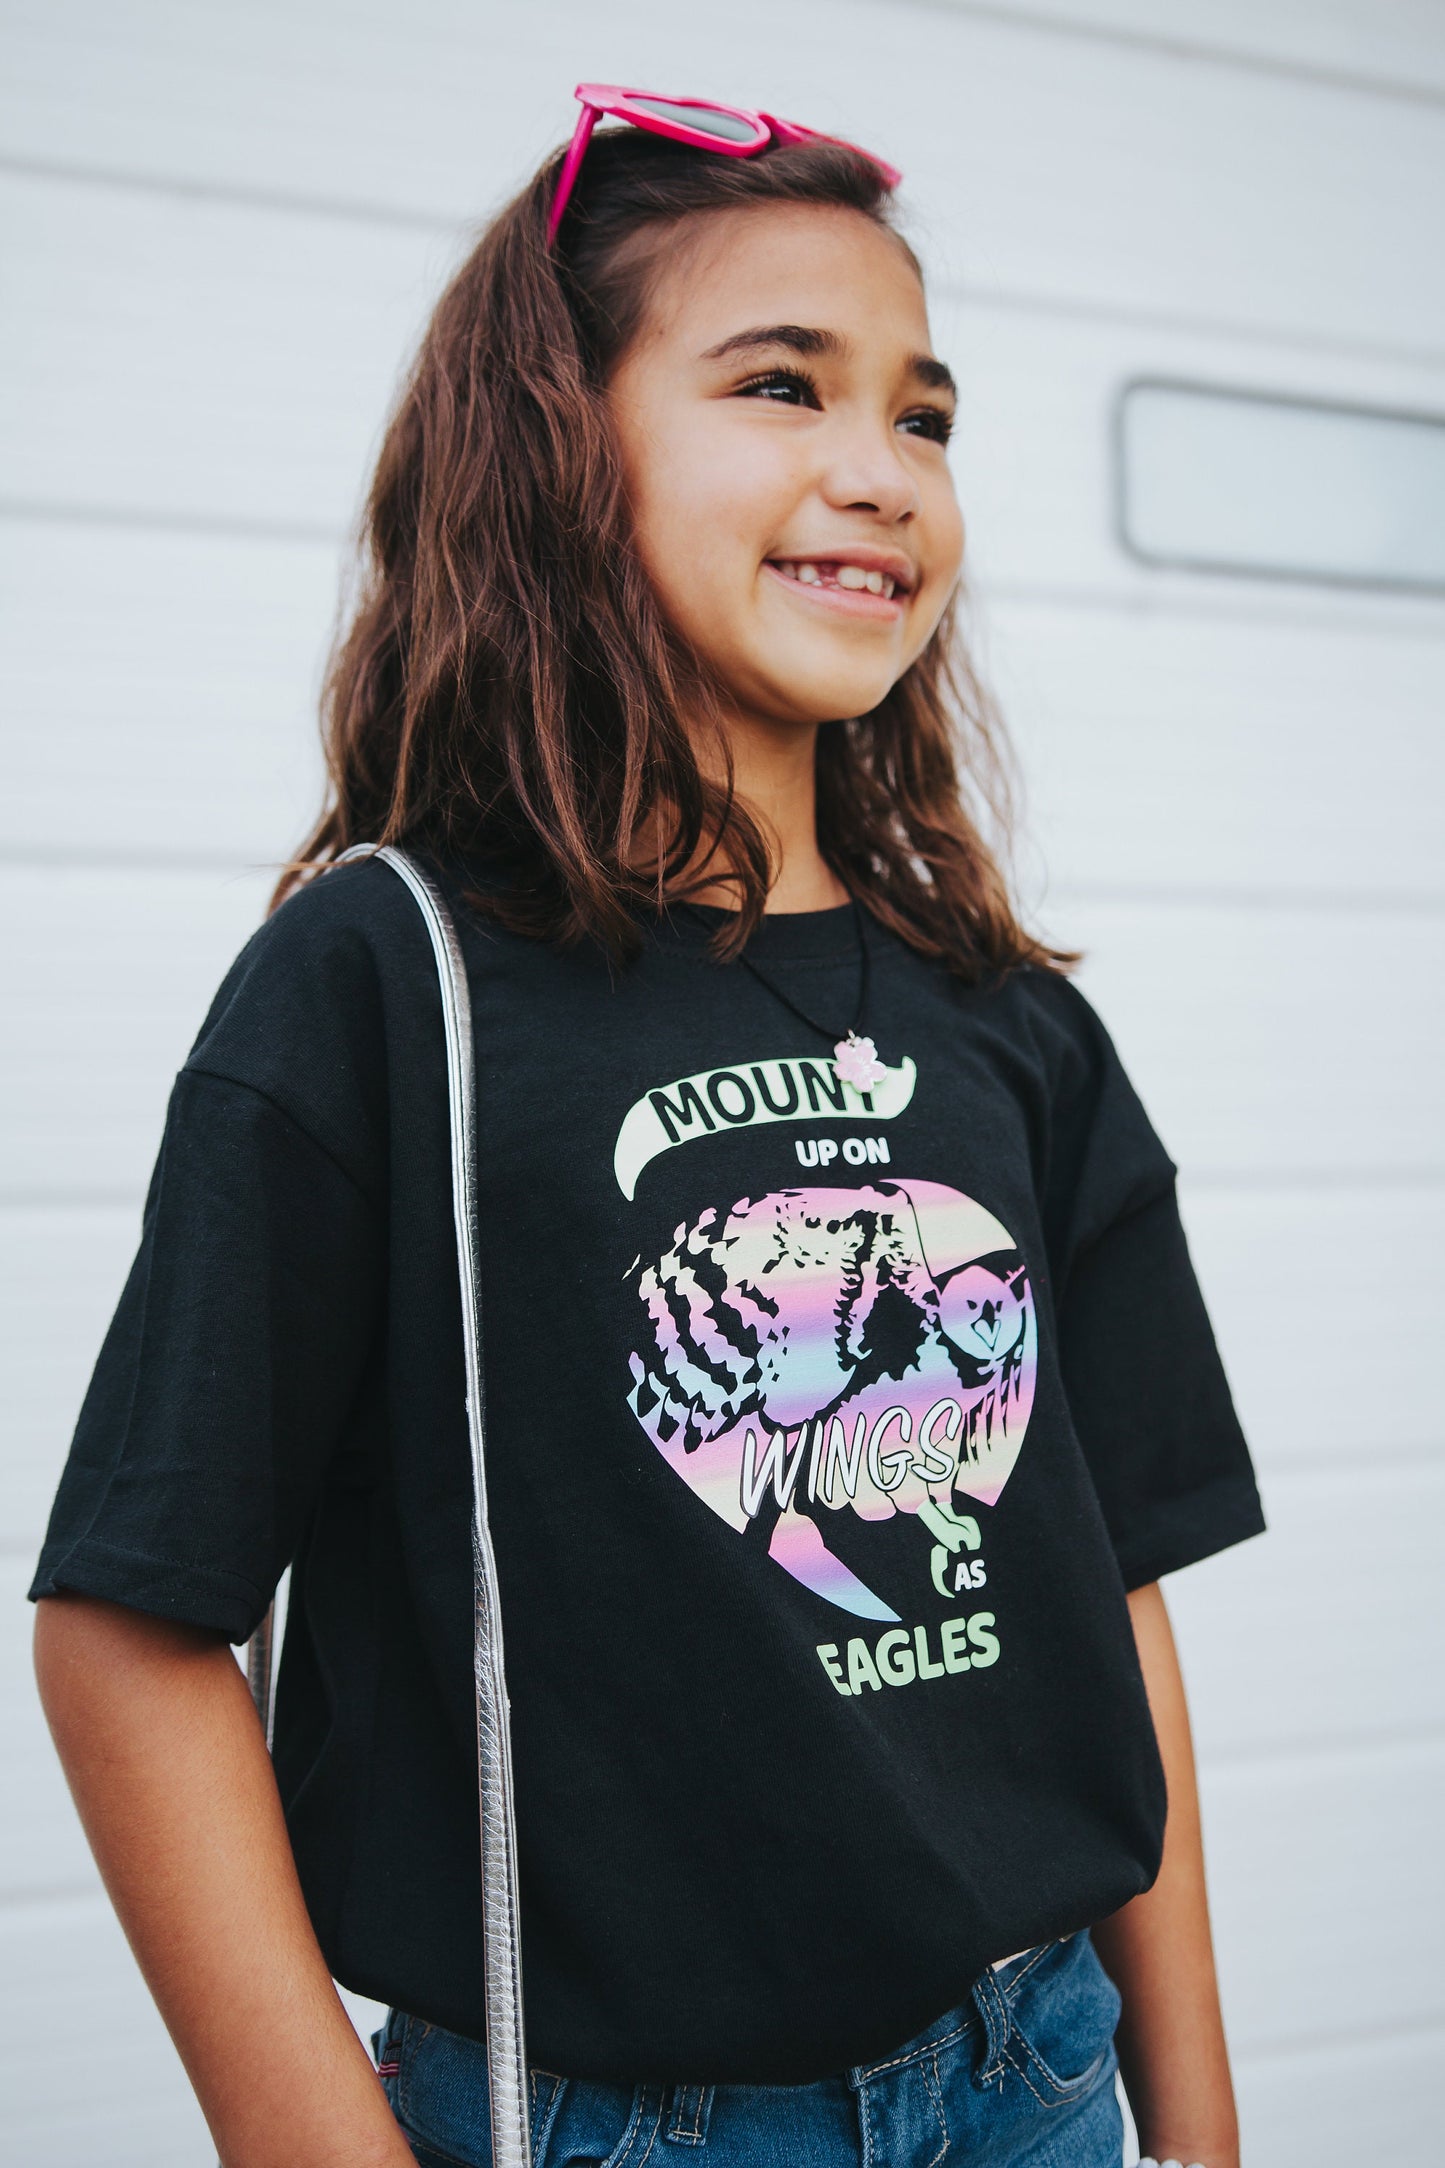 Eagles wings kids shirt, Christian Tee, Christian Shirt Gift, Jesus Shirt, Religious Apparel, Church Shirts, Christian Tee for Girls